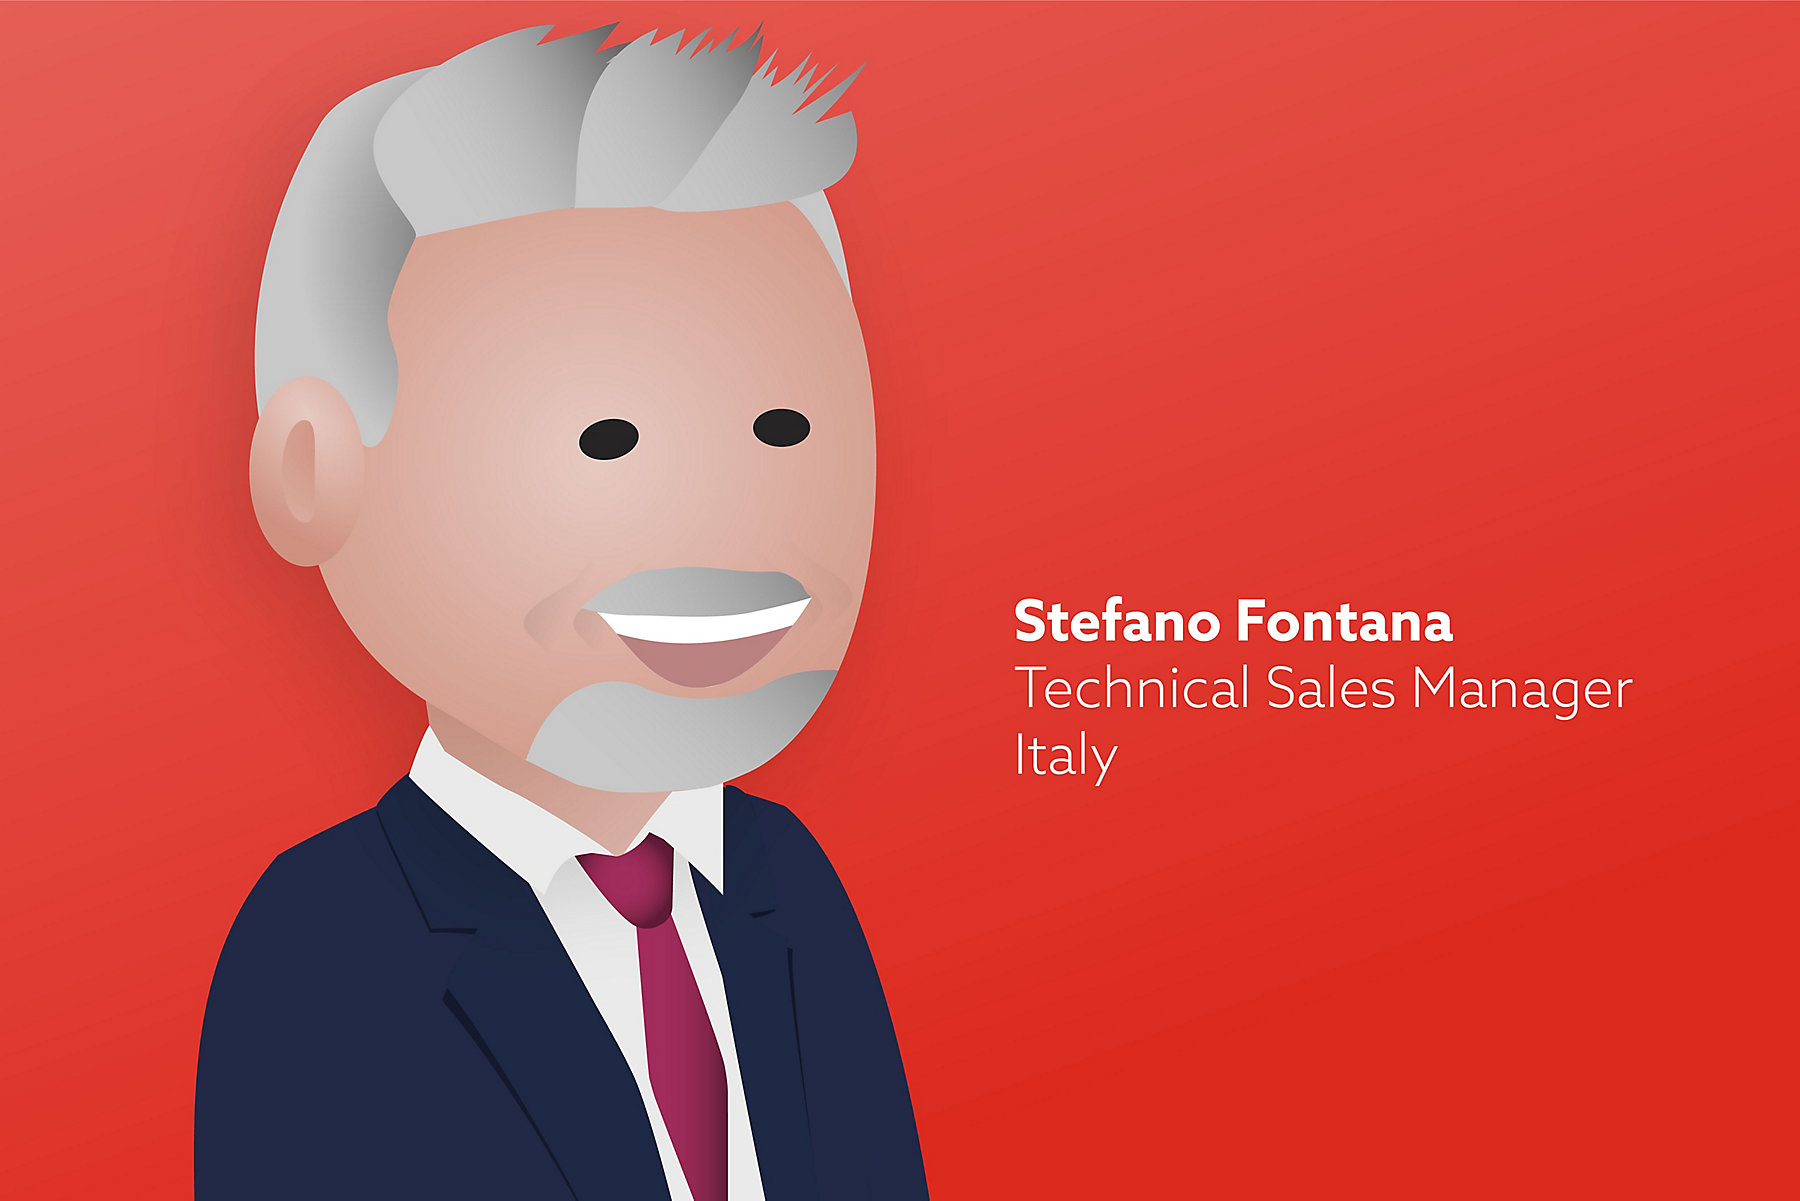 Employee in the spotlight: Stefano Montana